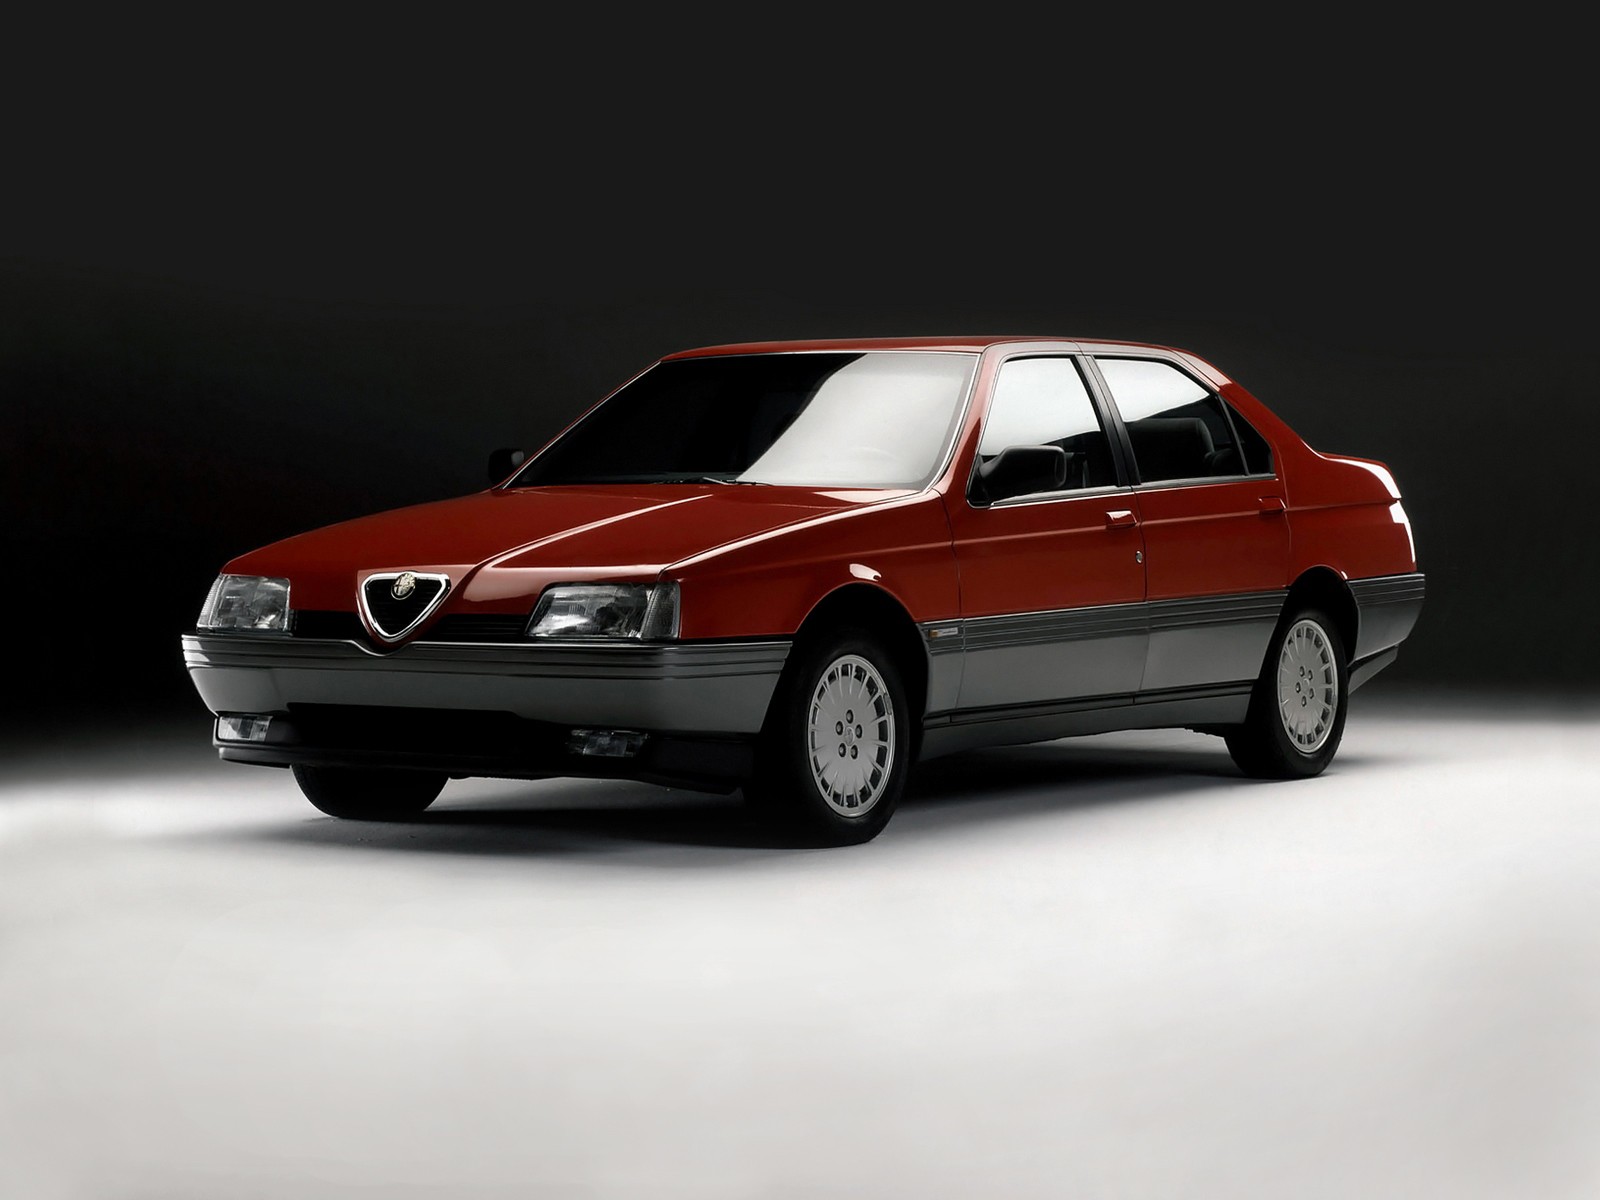 Alfa Romeo 164 - убава на многу начини